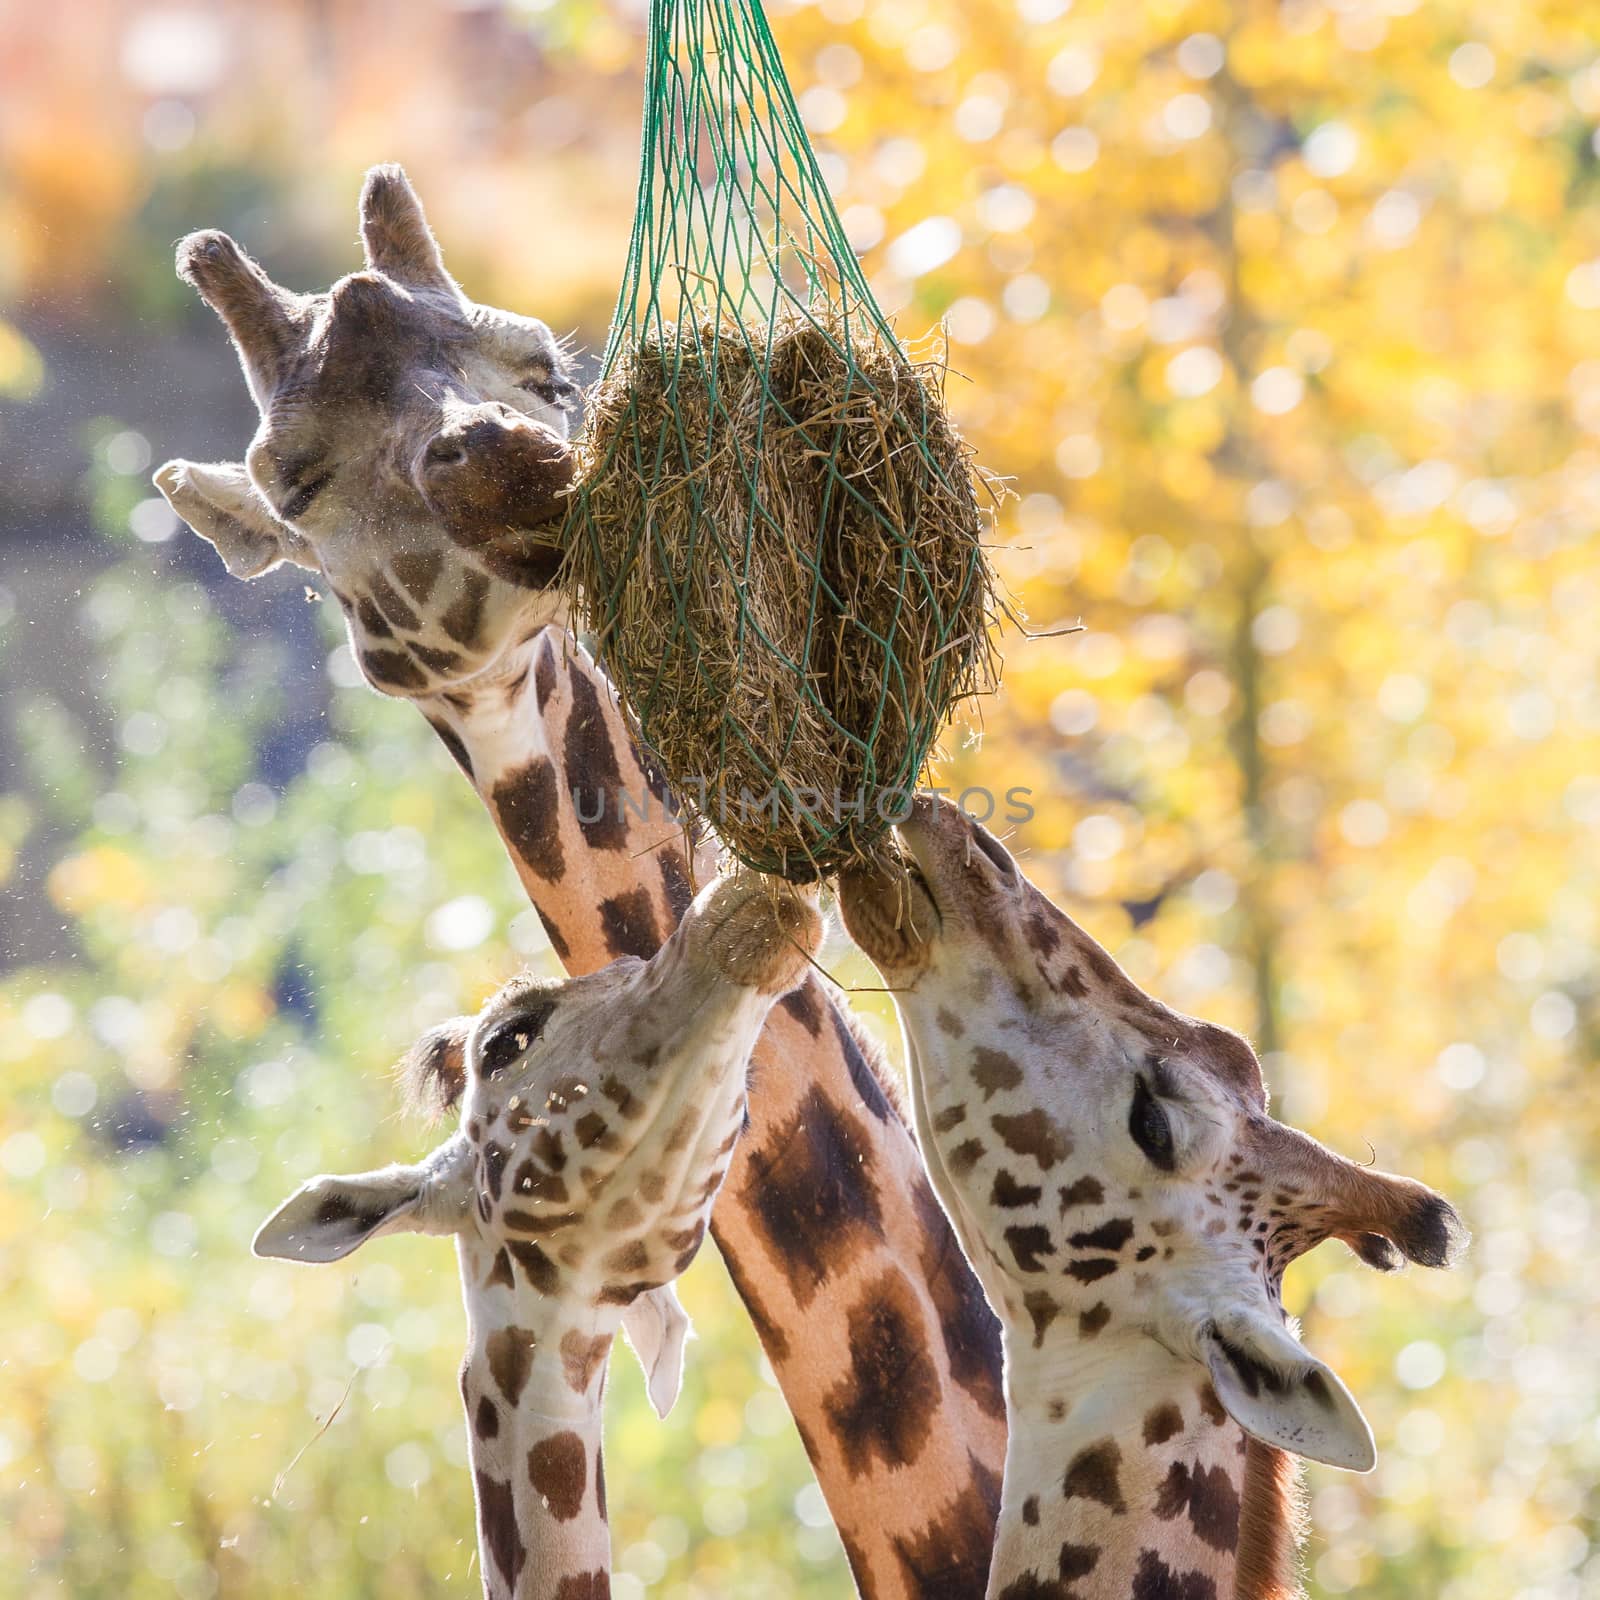 Three giraffes eating hay  by michaklootwijk